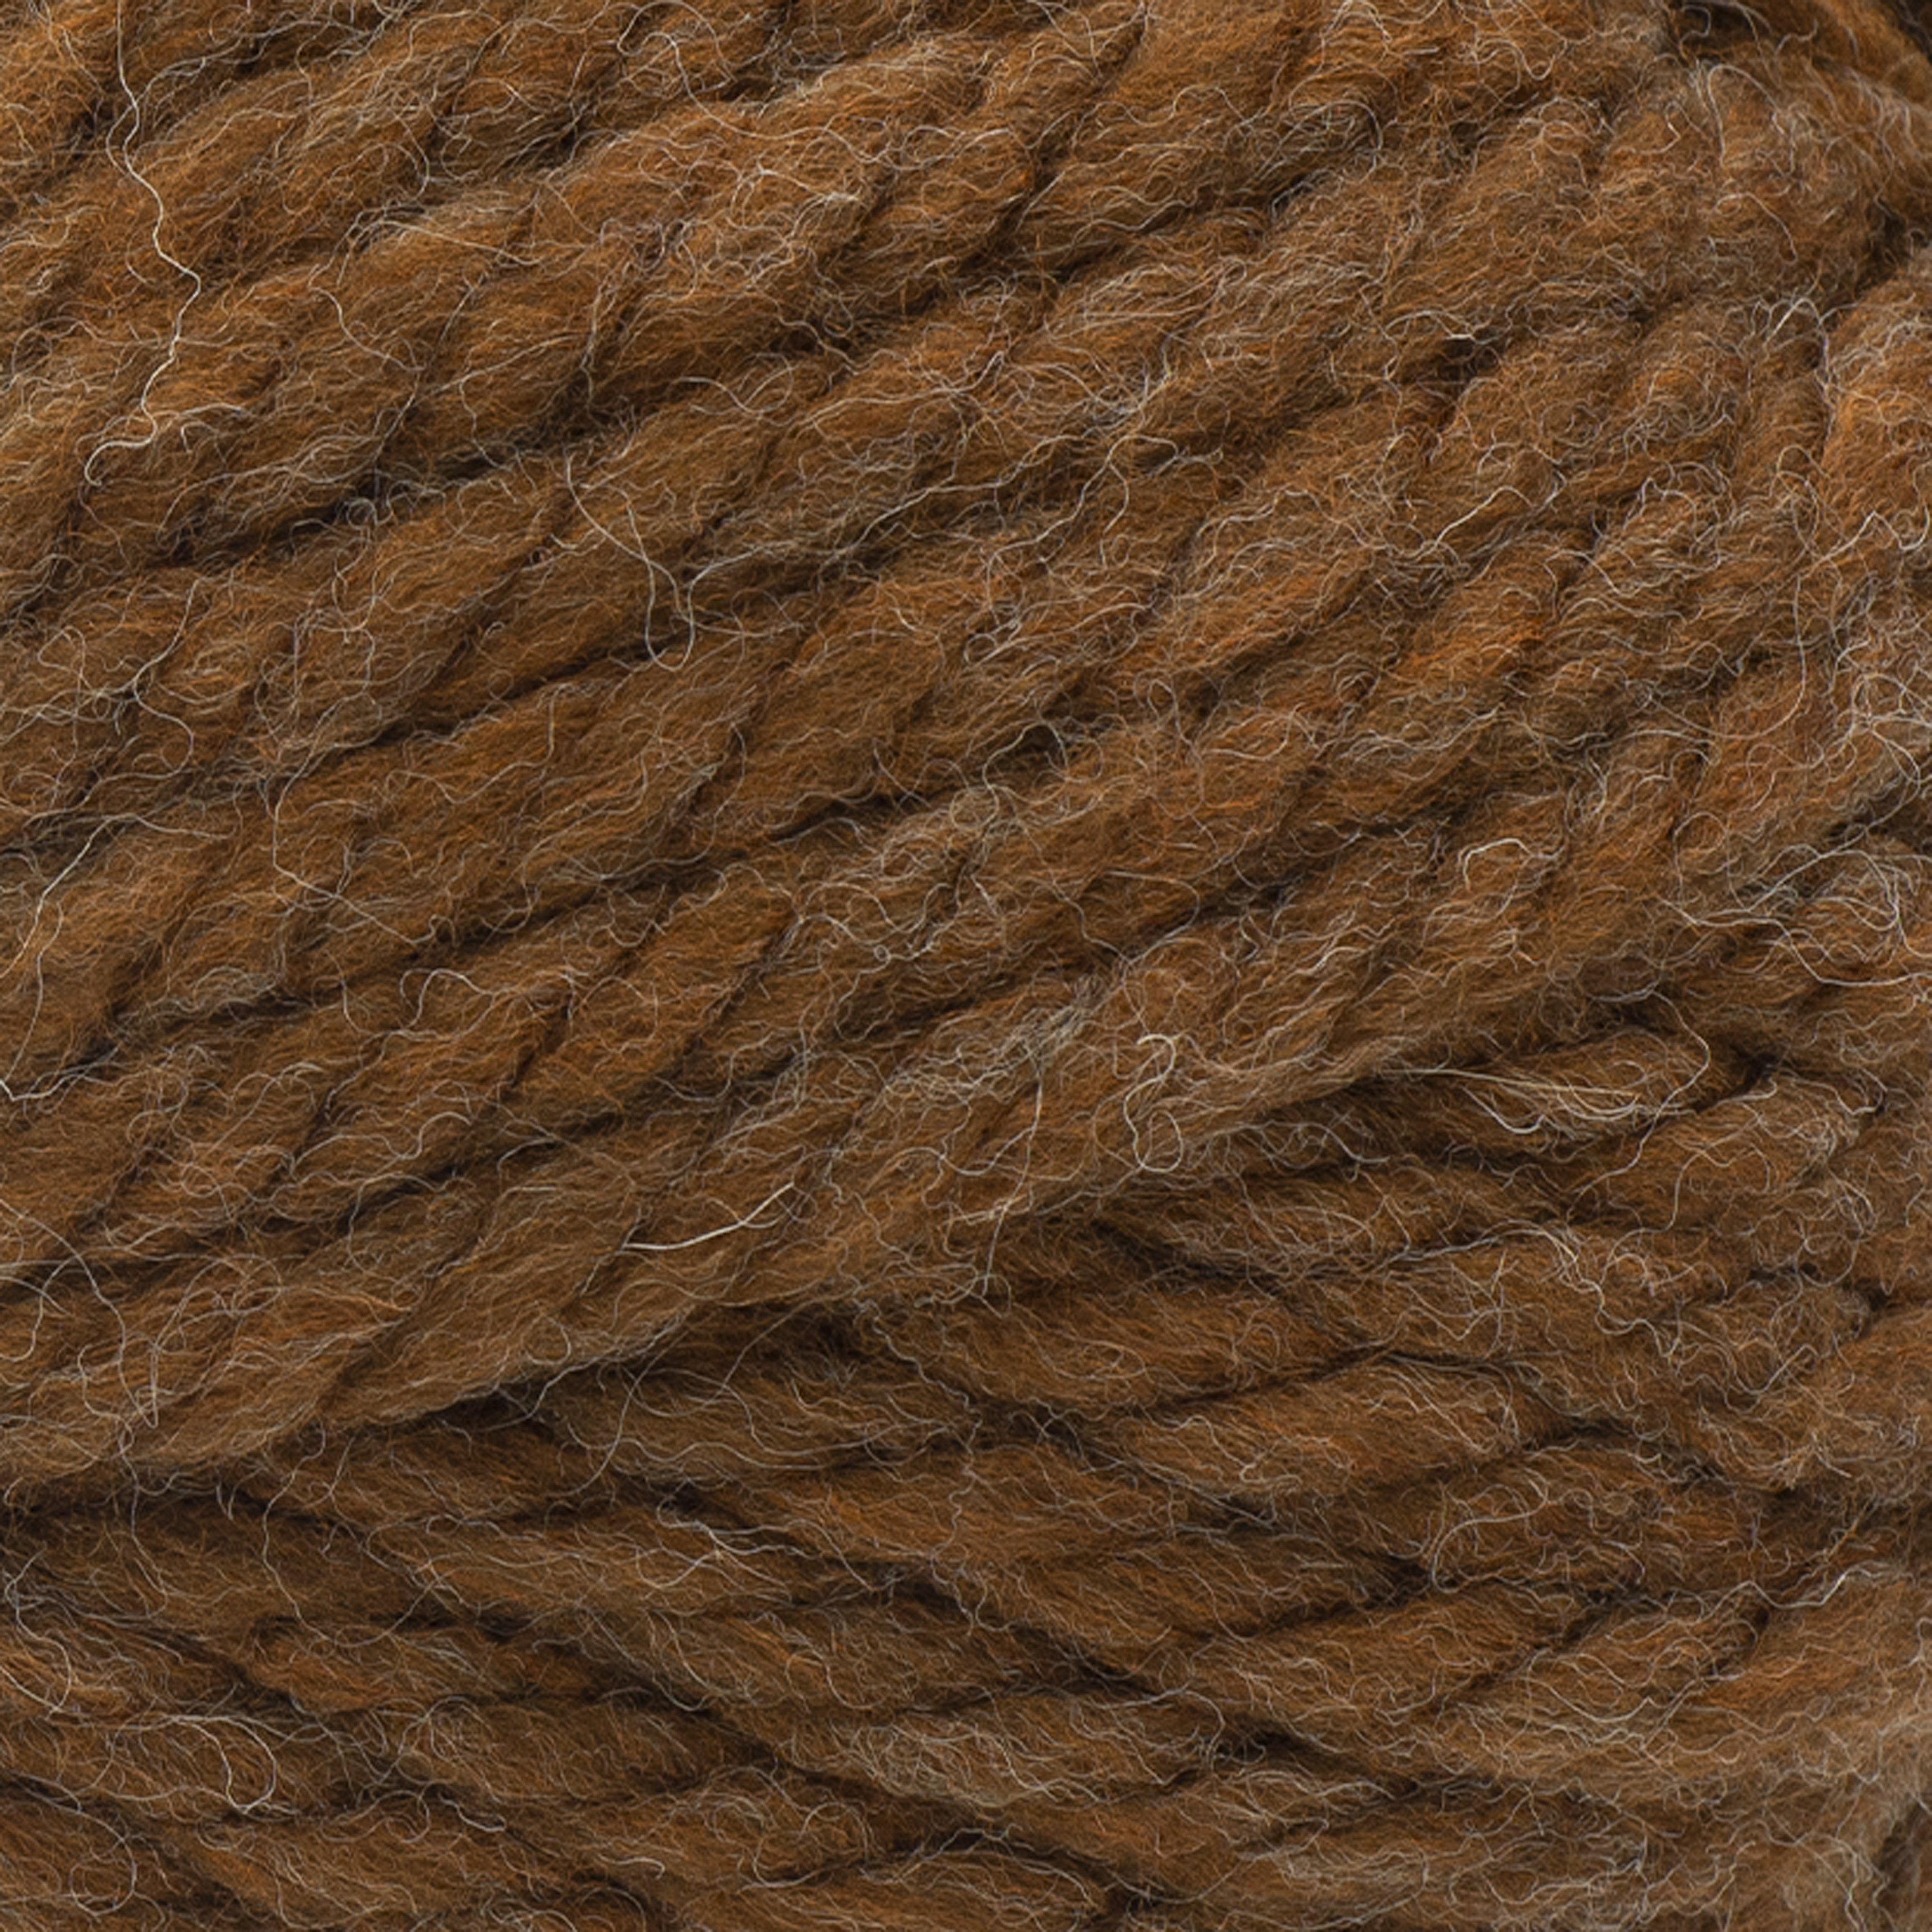 Lion Brand Pumpkin Spice Wool-Ease WOW! Yarn (7 - Jumbo), Free